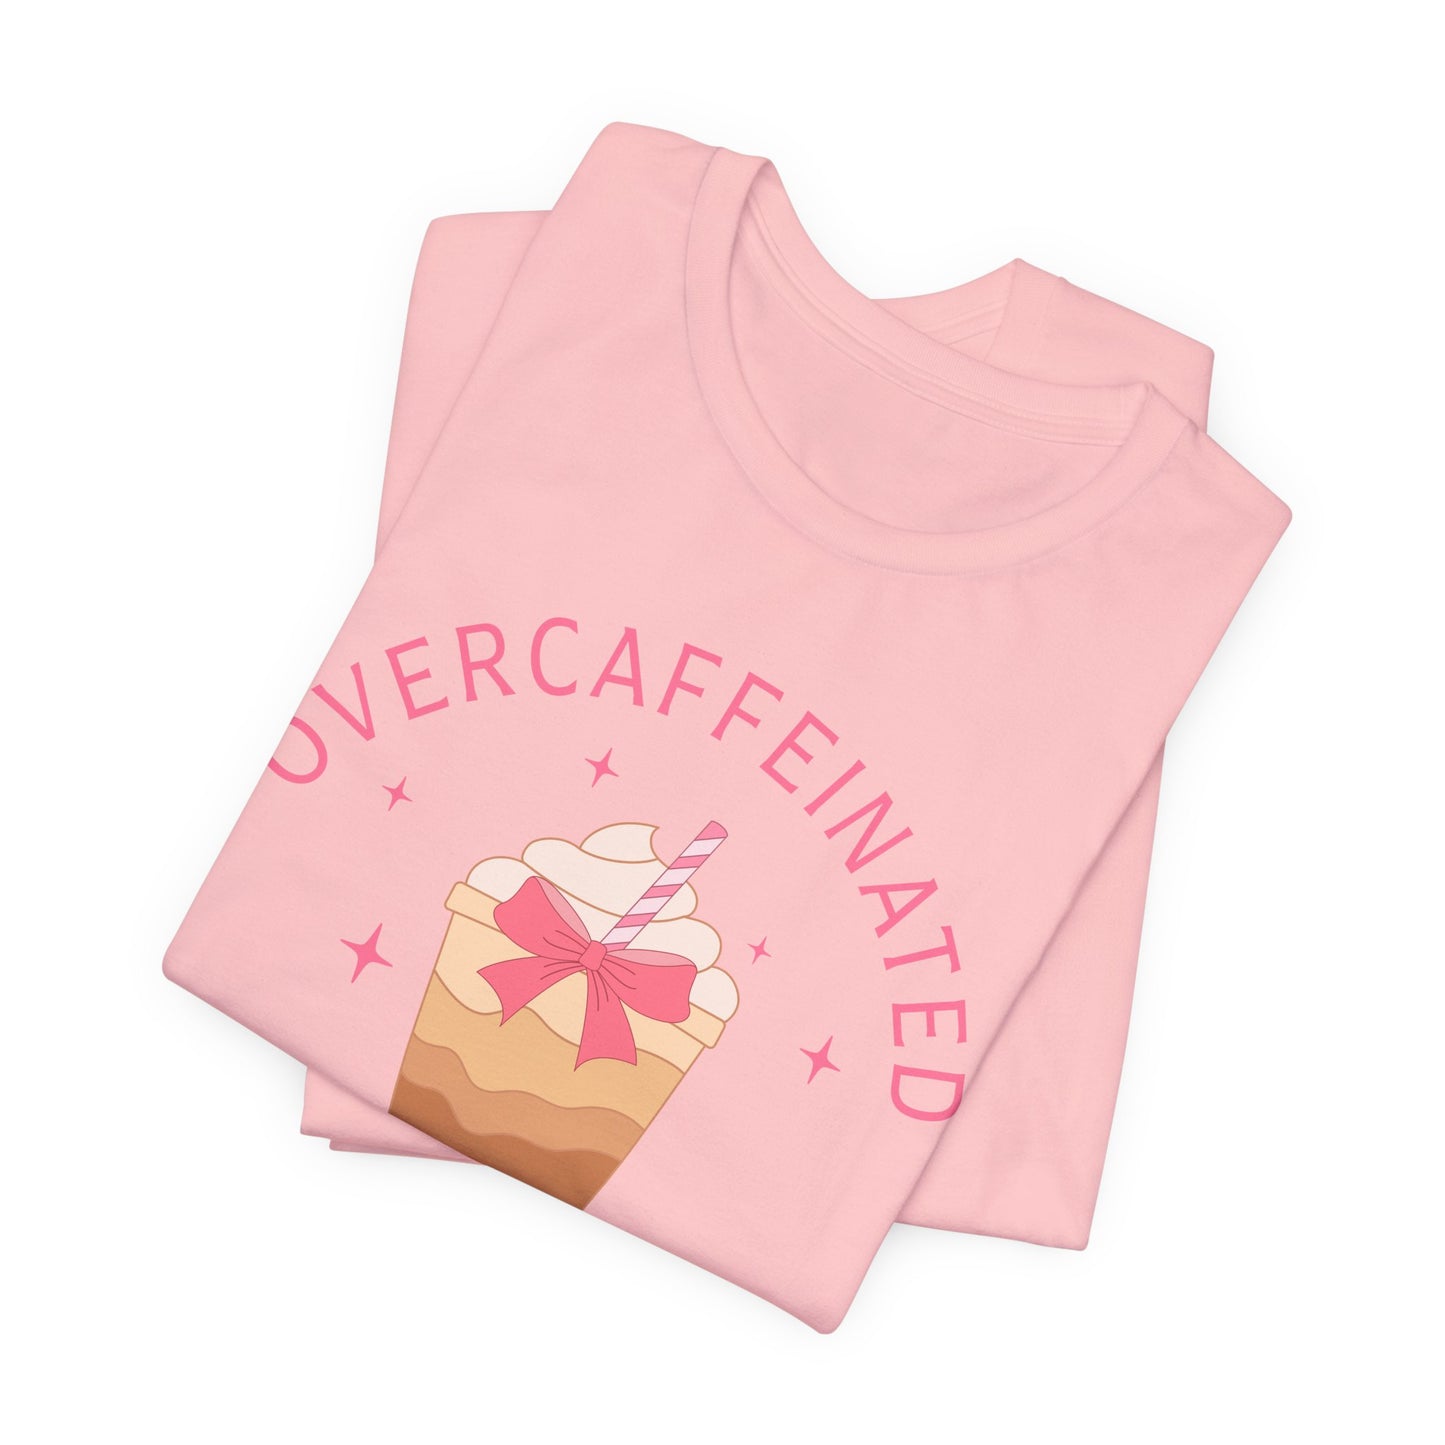 Overcaffeinated